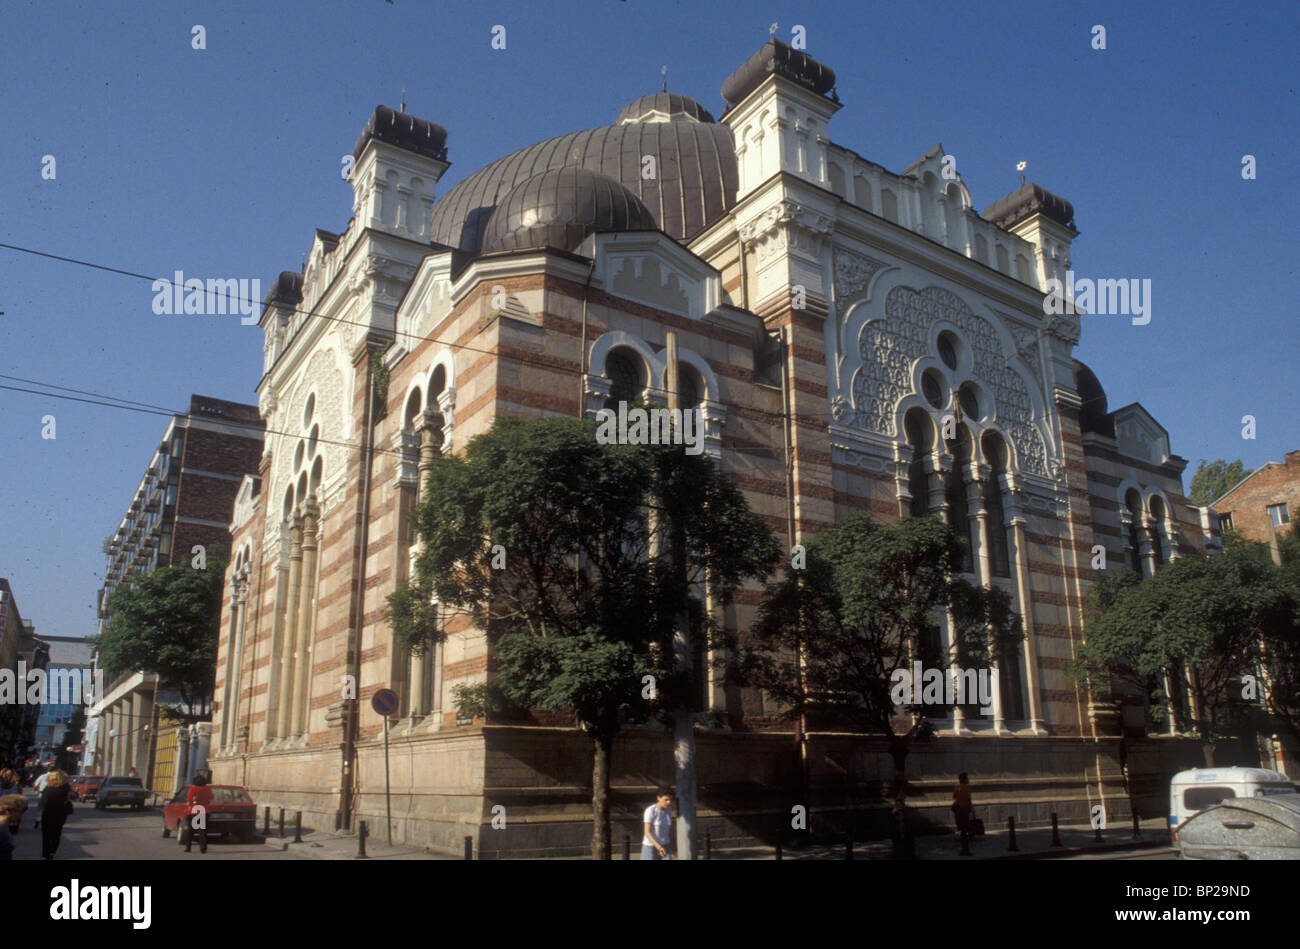 3216. SOFIA - la grande synagogue construite en 1930 Banque D'Images